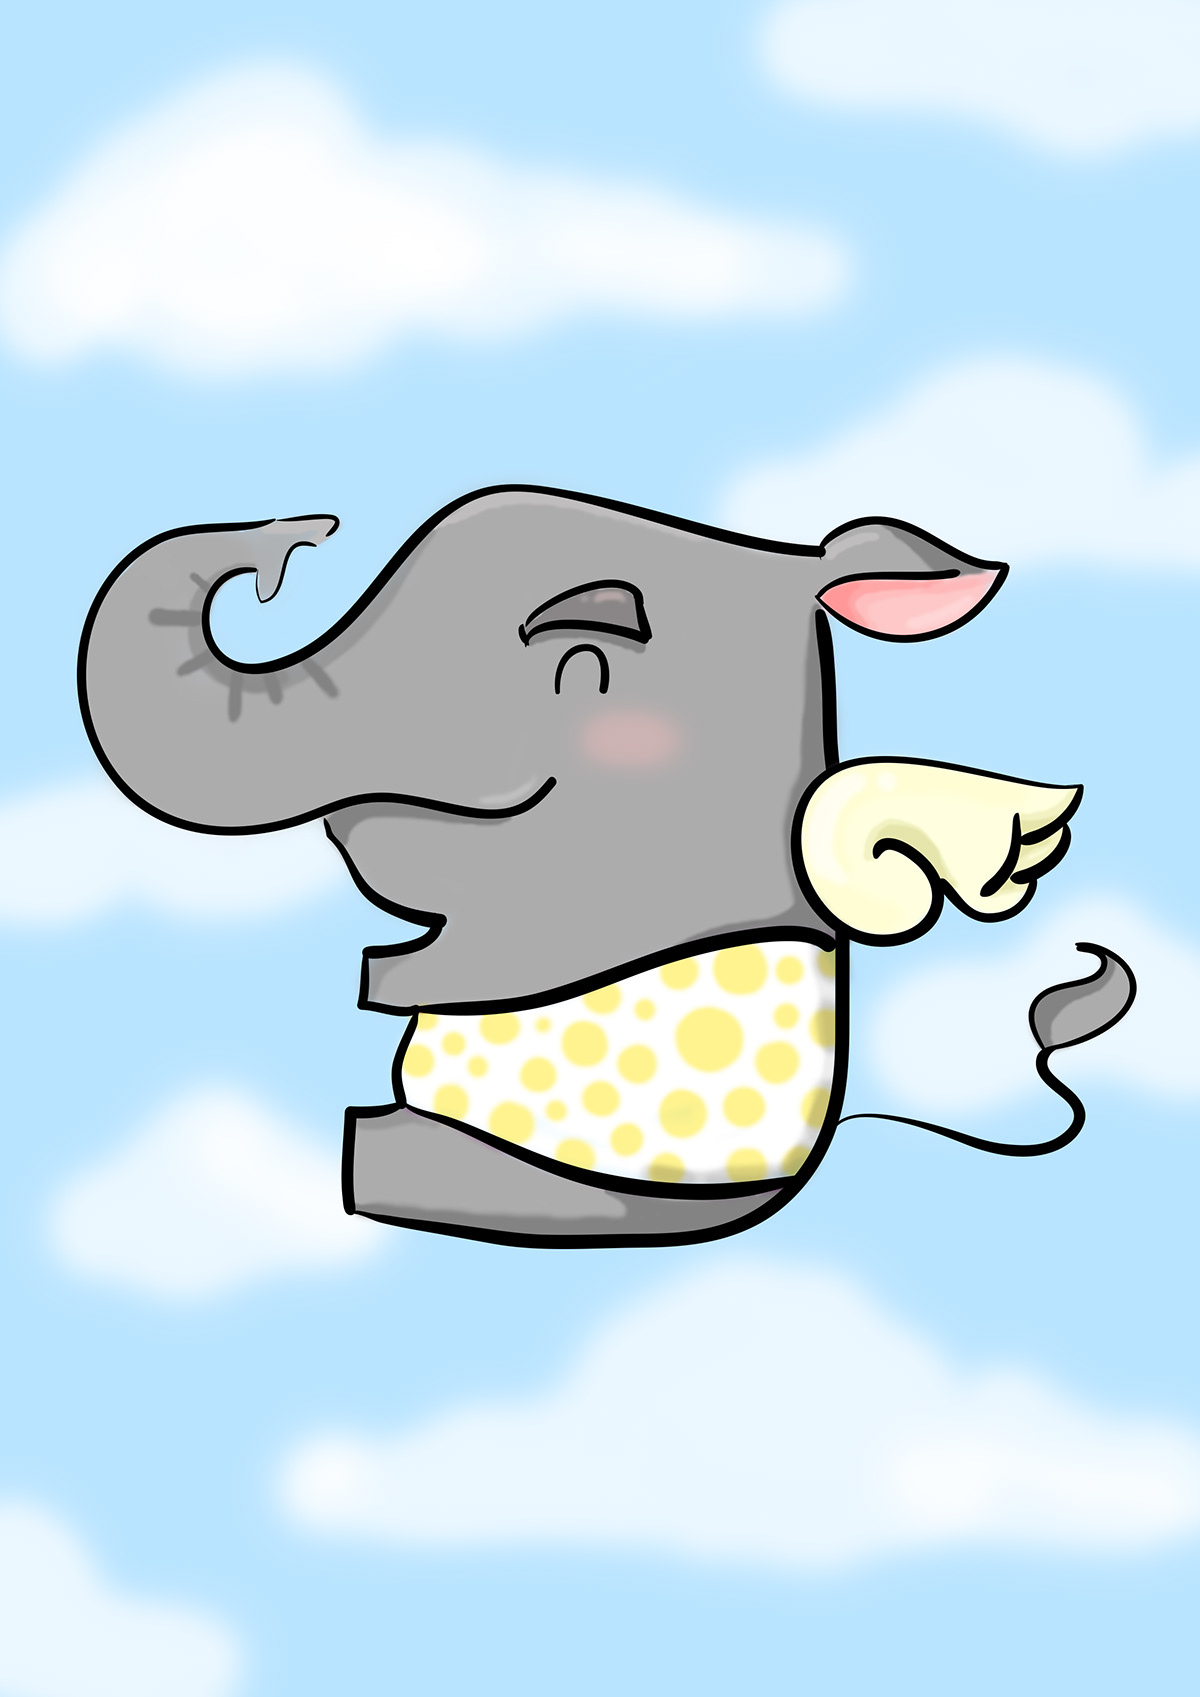 Flying Elephant elephant Fly clouds SKY cute cartoon